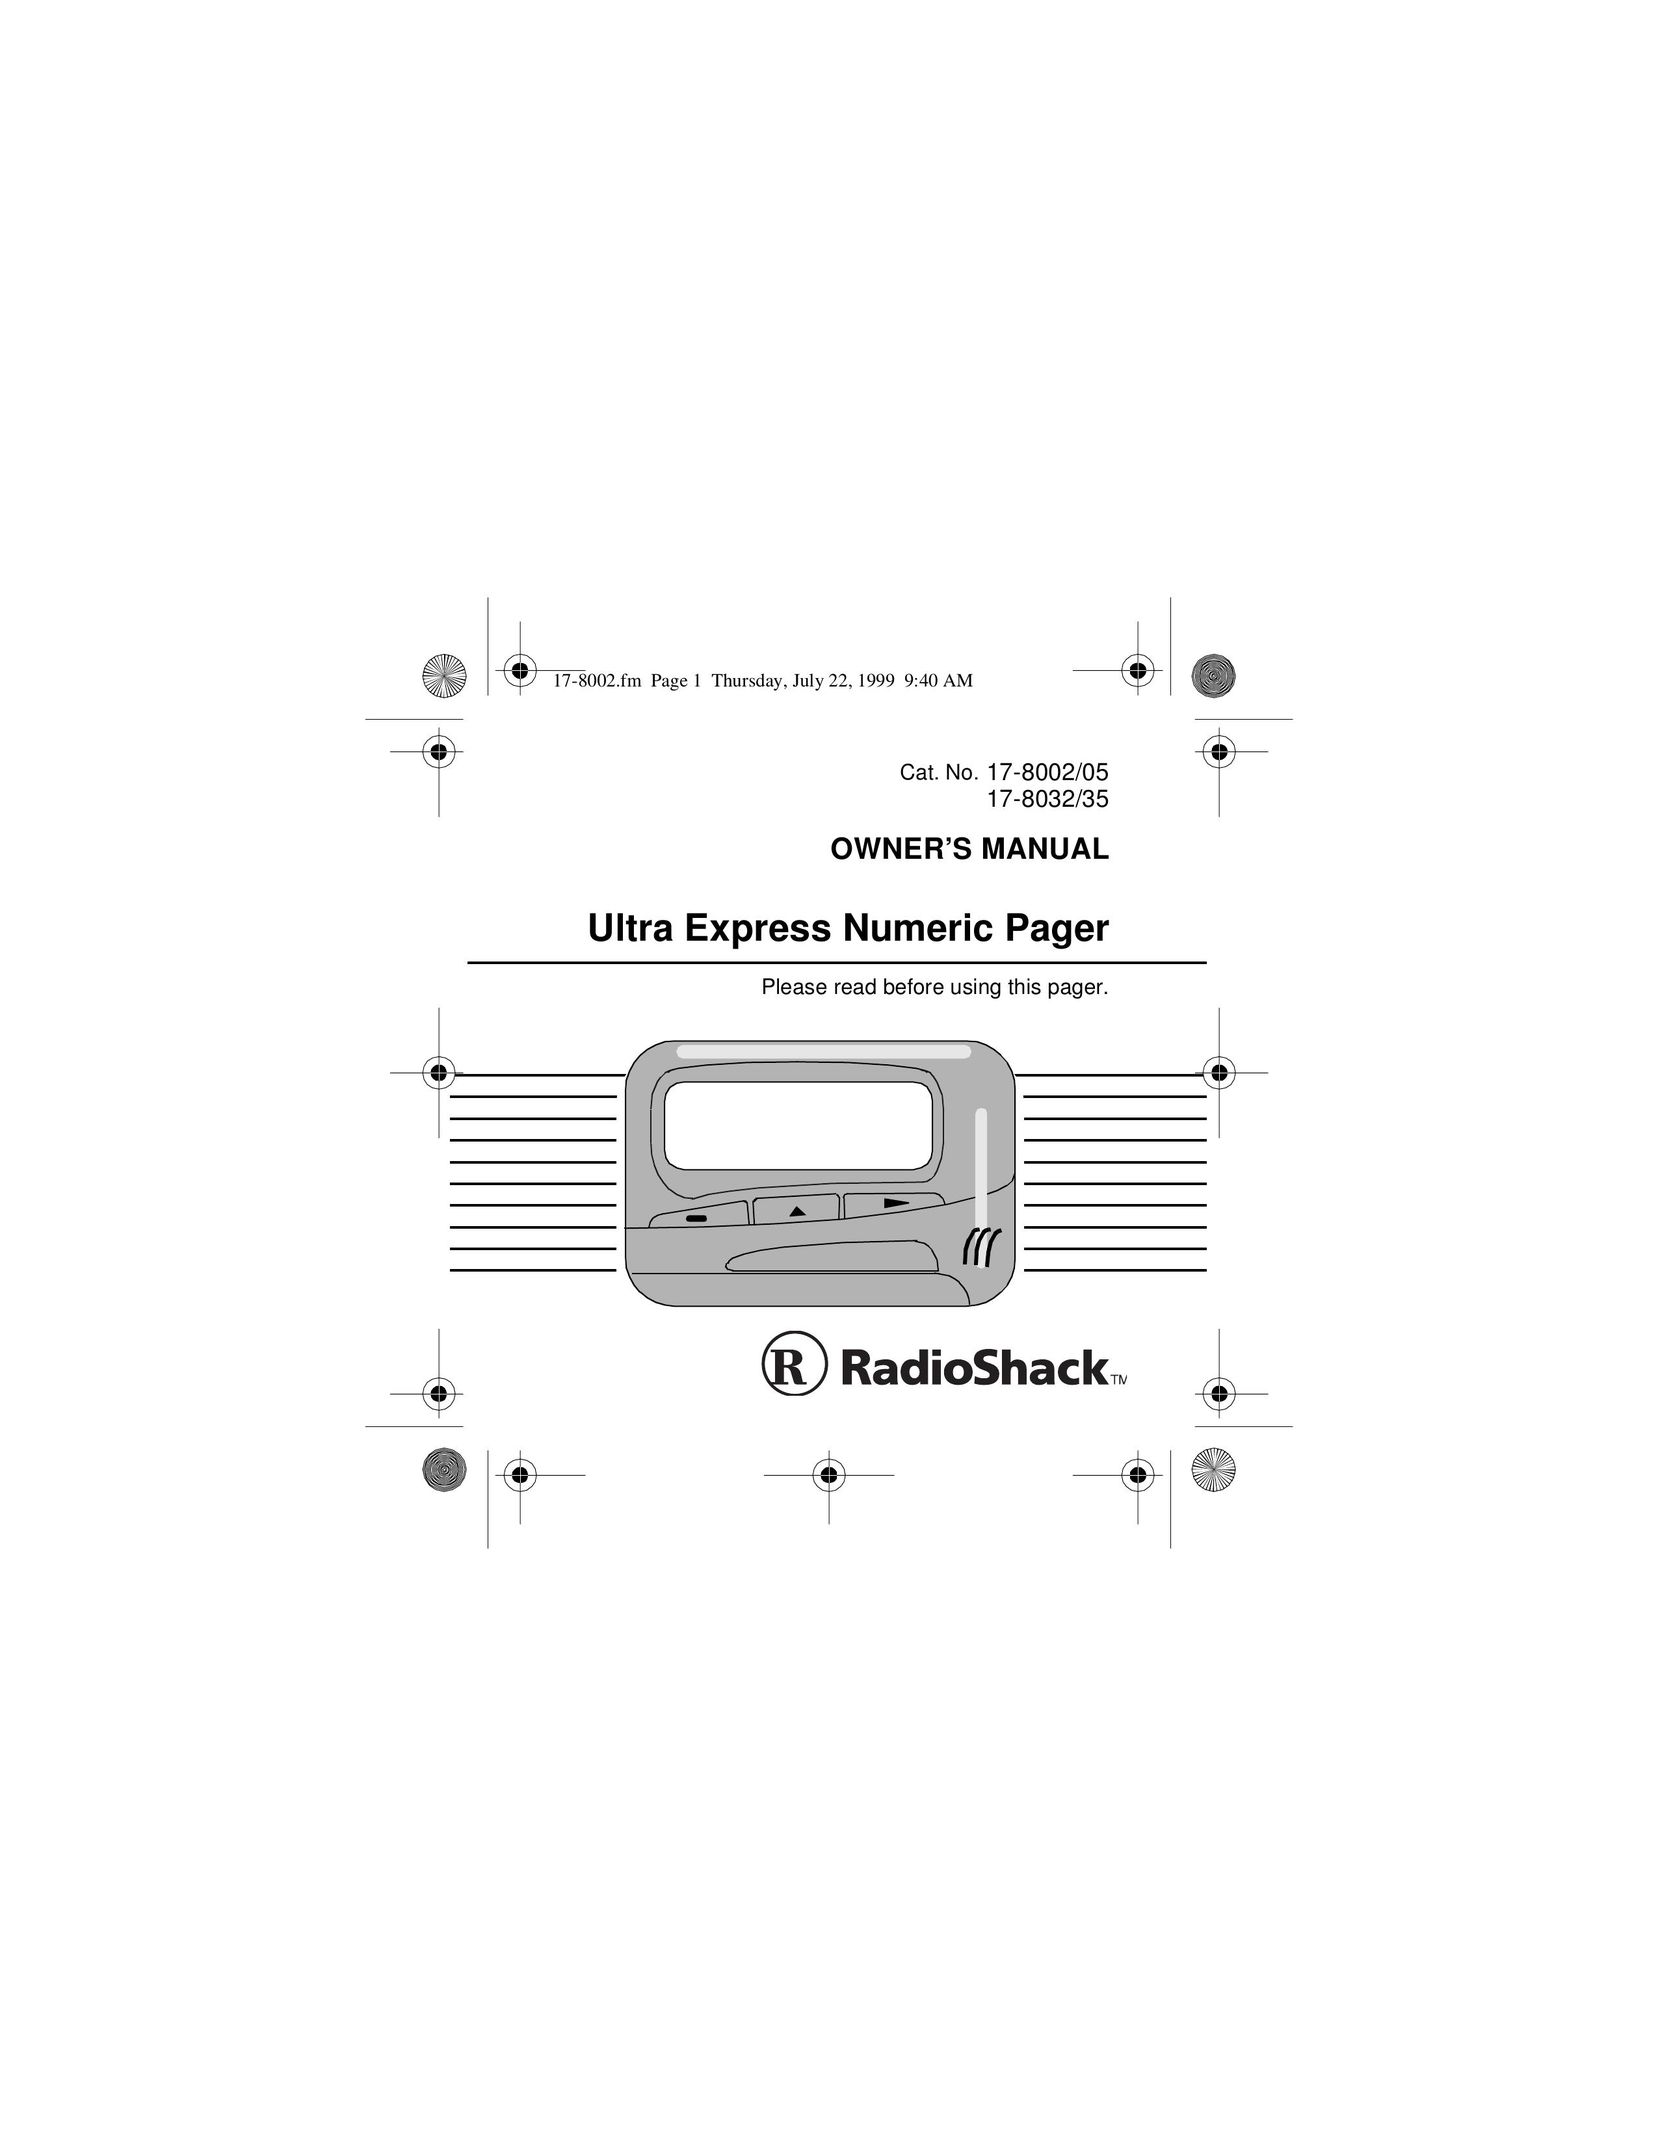 Radio Shack 17-8032/35 Pager User Manual